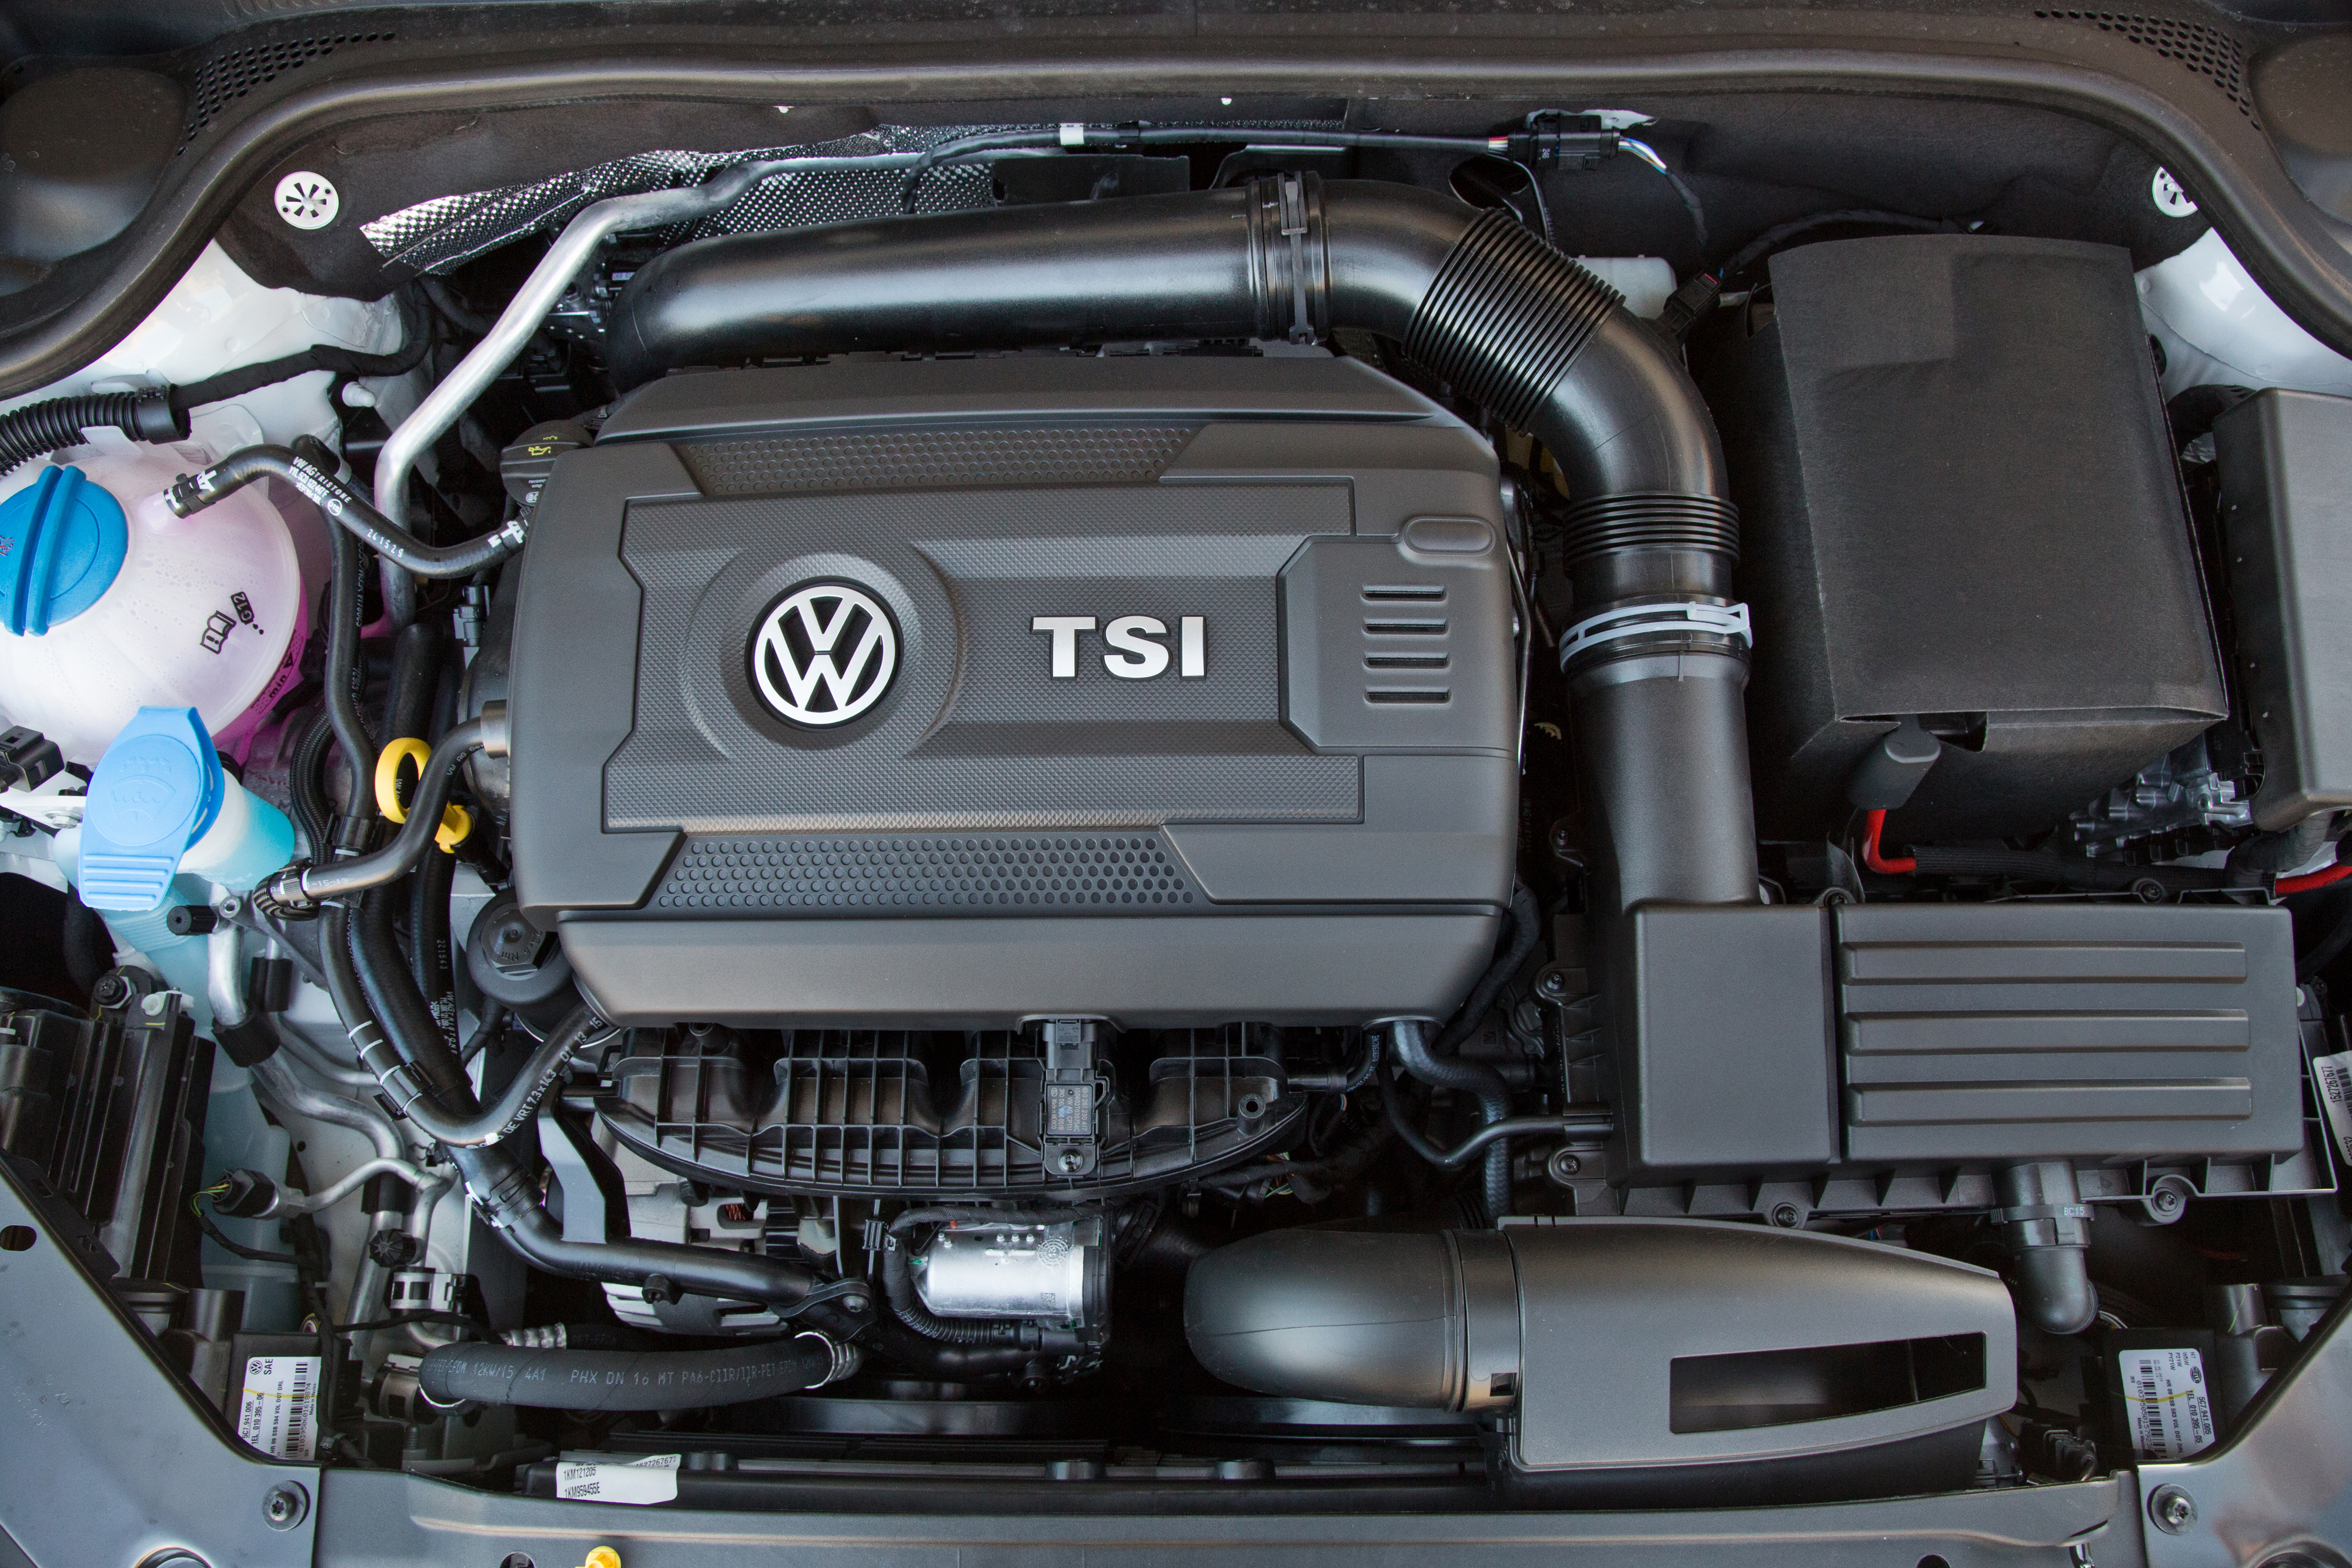 Volkswagen tiguan 2.0 tsi. Фольксваген Джетта ТСИ 1.4. Фольксваген Джетта 6 1.4 TSI. Фольксваген Тигуан 2.0 TSI. Двигатель Фольксваген Джетта 1.4 TSI.